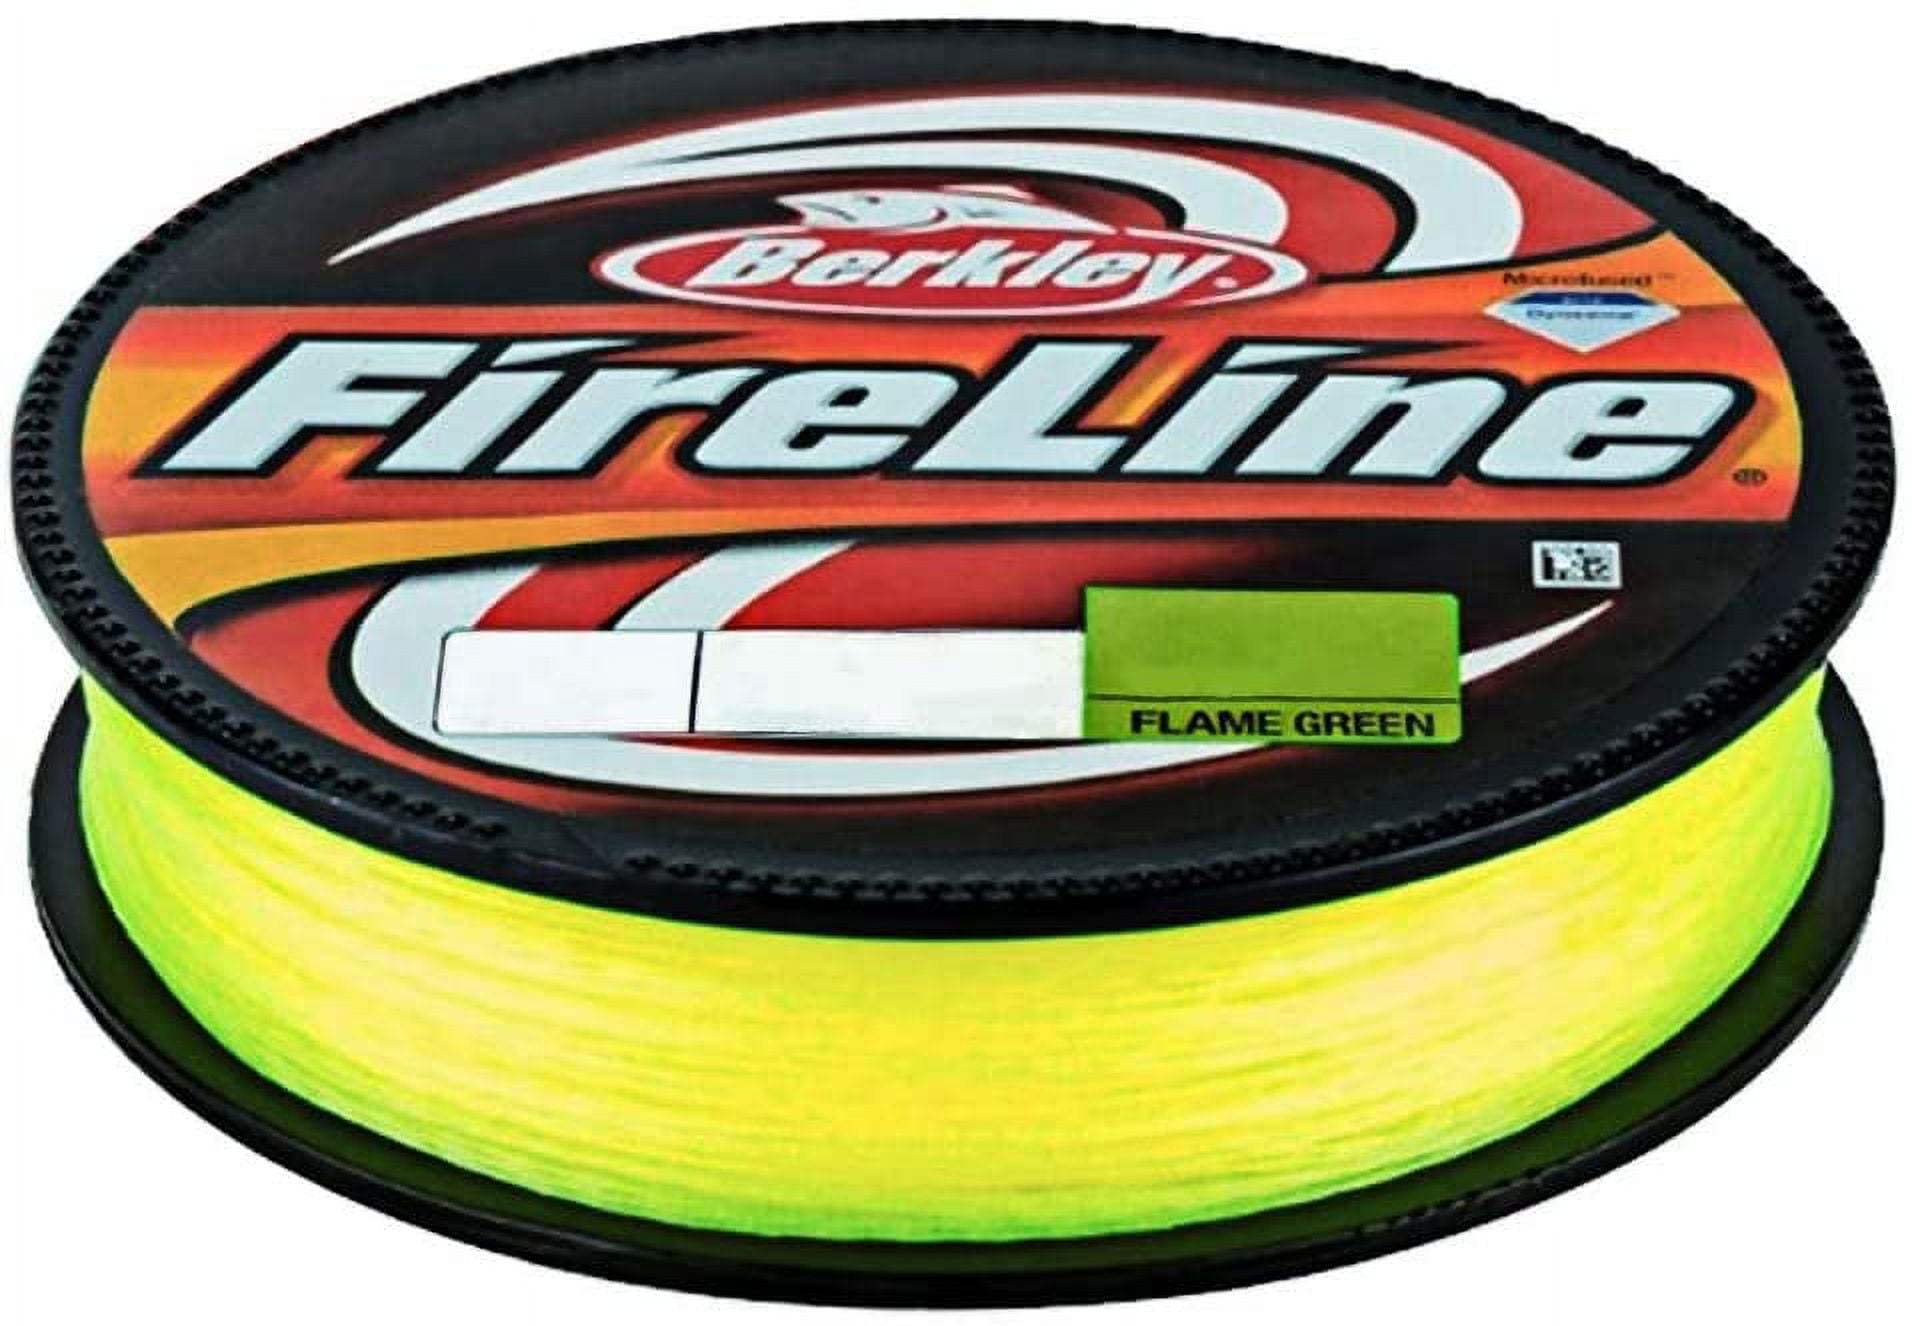 Berkley Fireline® Crystal Braided Super line Fishing Line 4 Lb. 1.8kg 